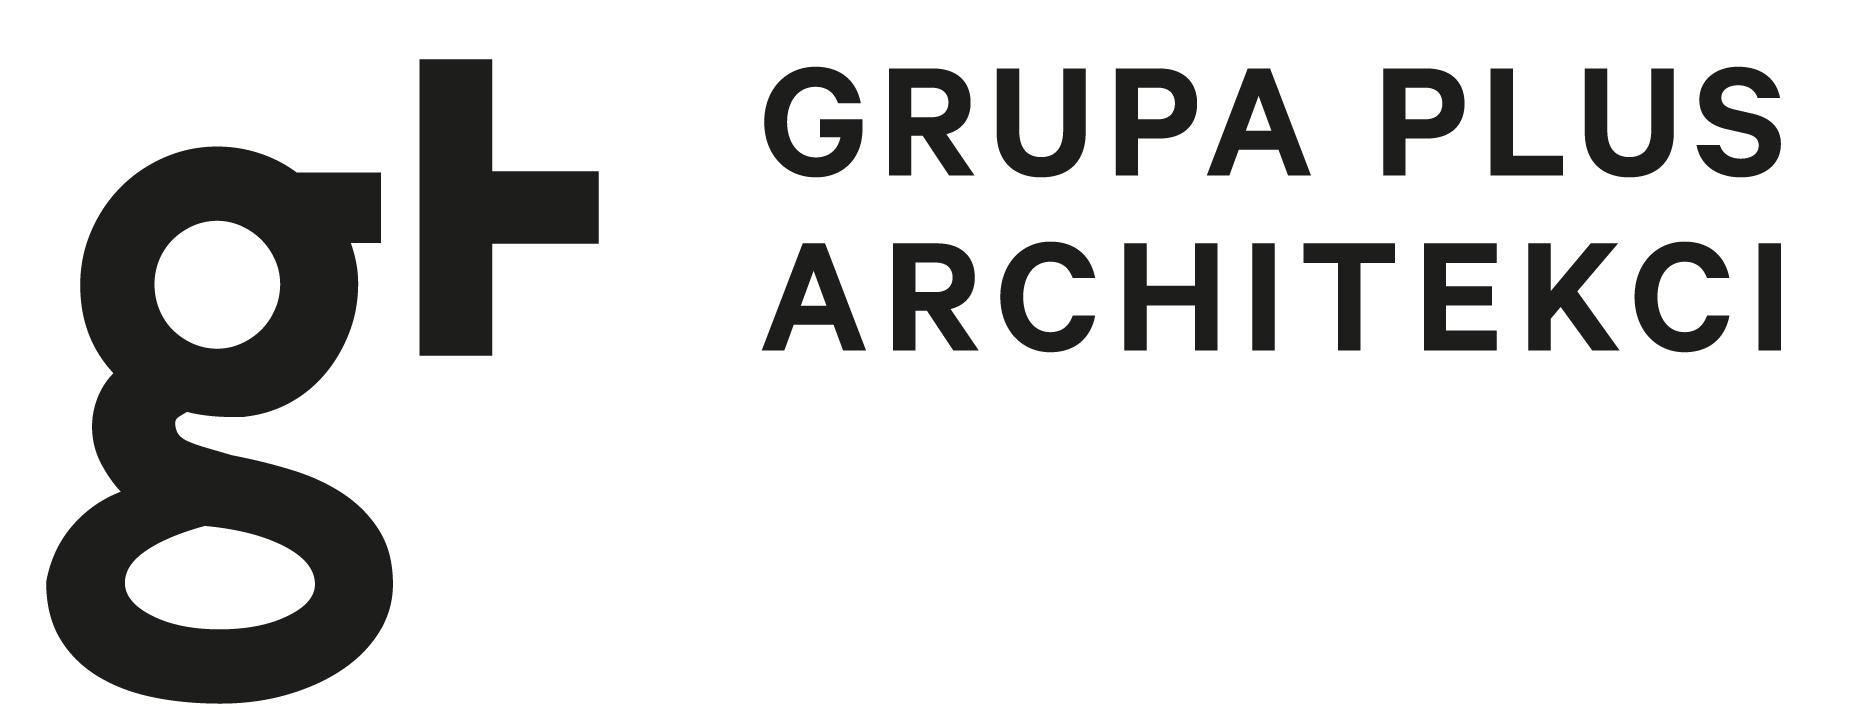 Grupa Plus Architekci